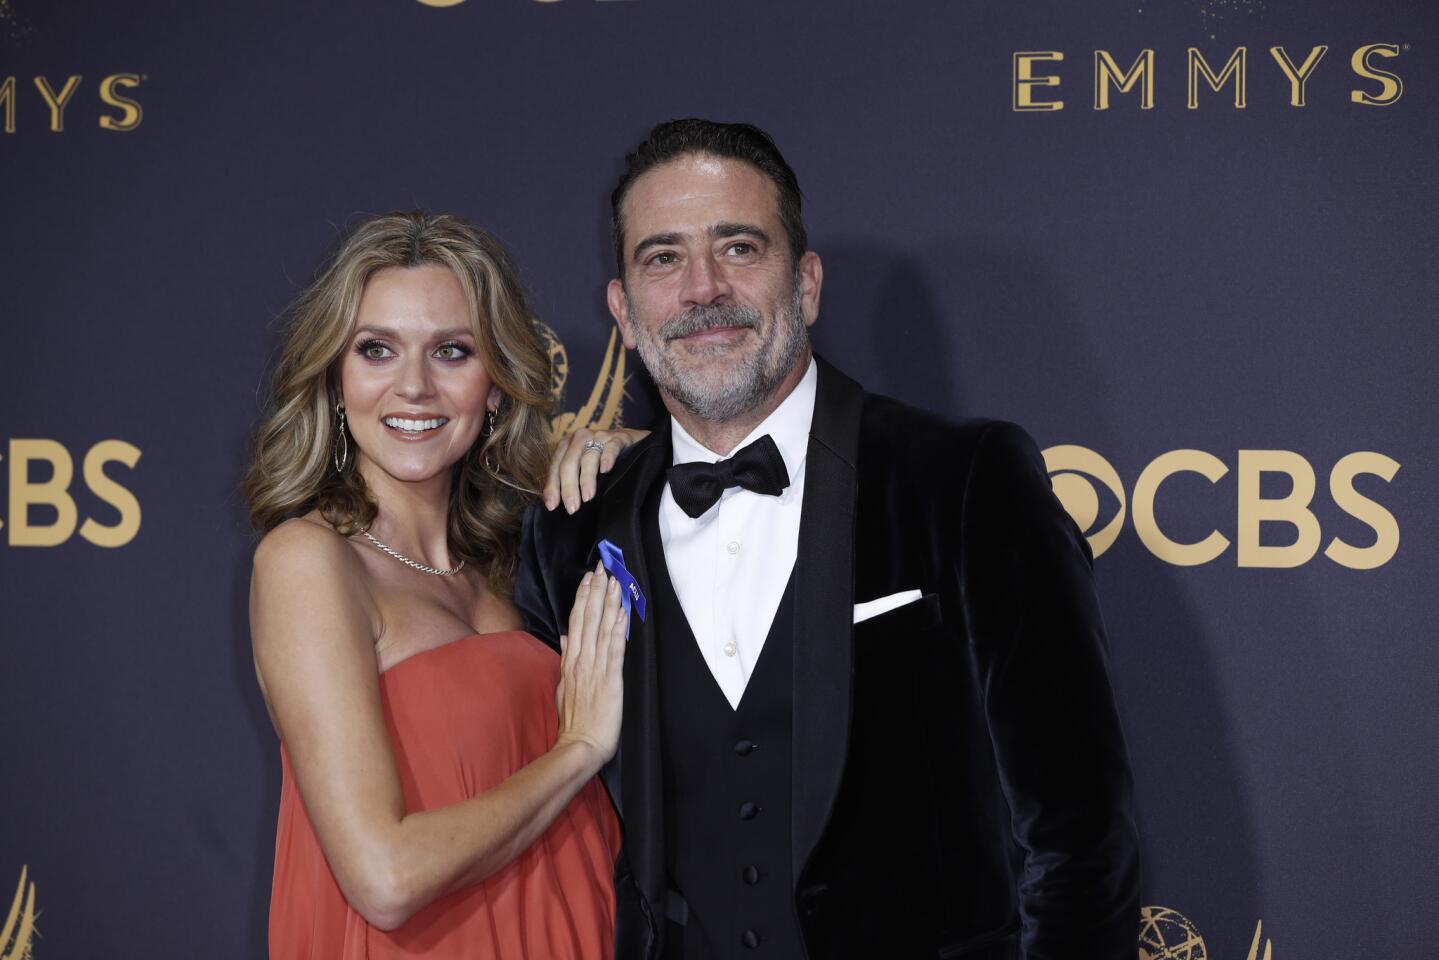 Emmys 2017 arrivals